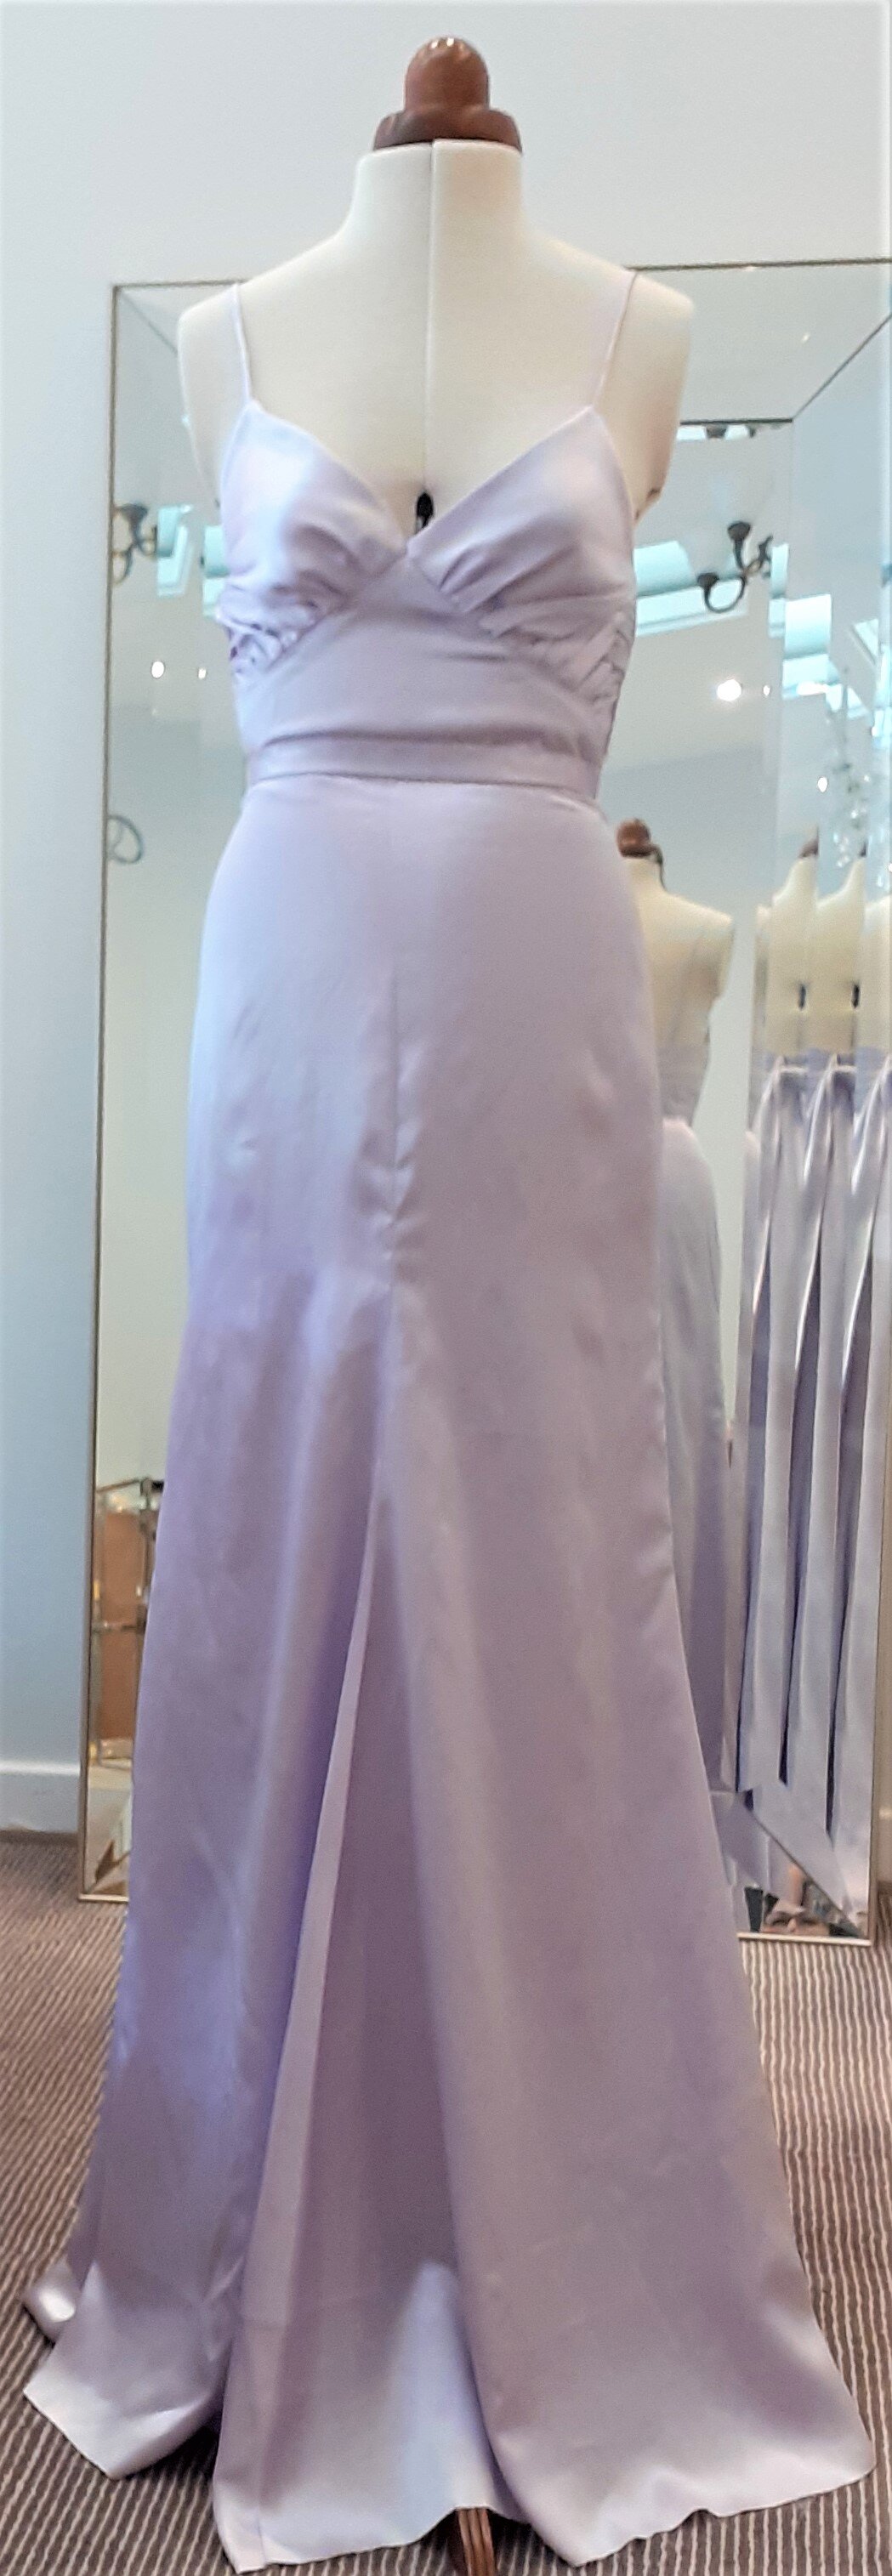 lilac dress4 (2).jpg